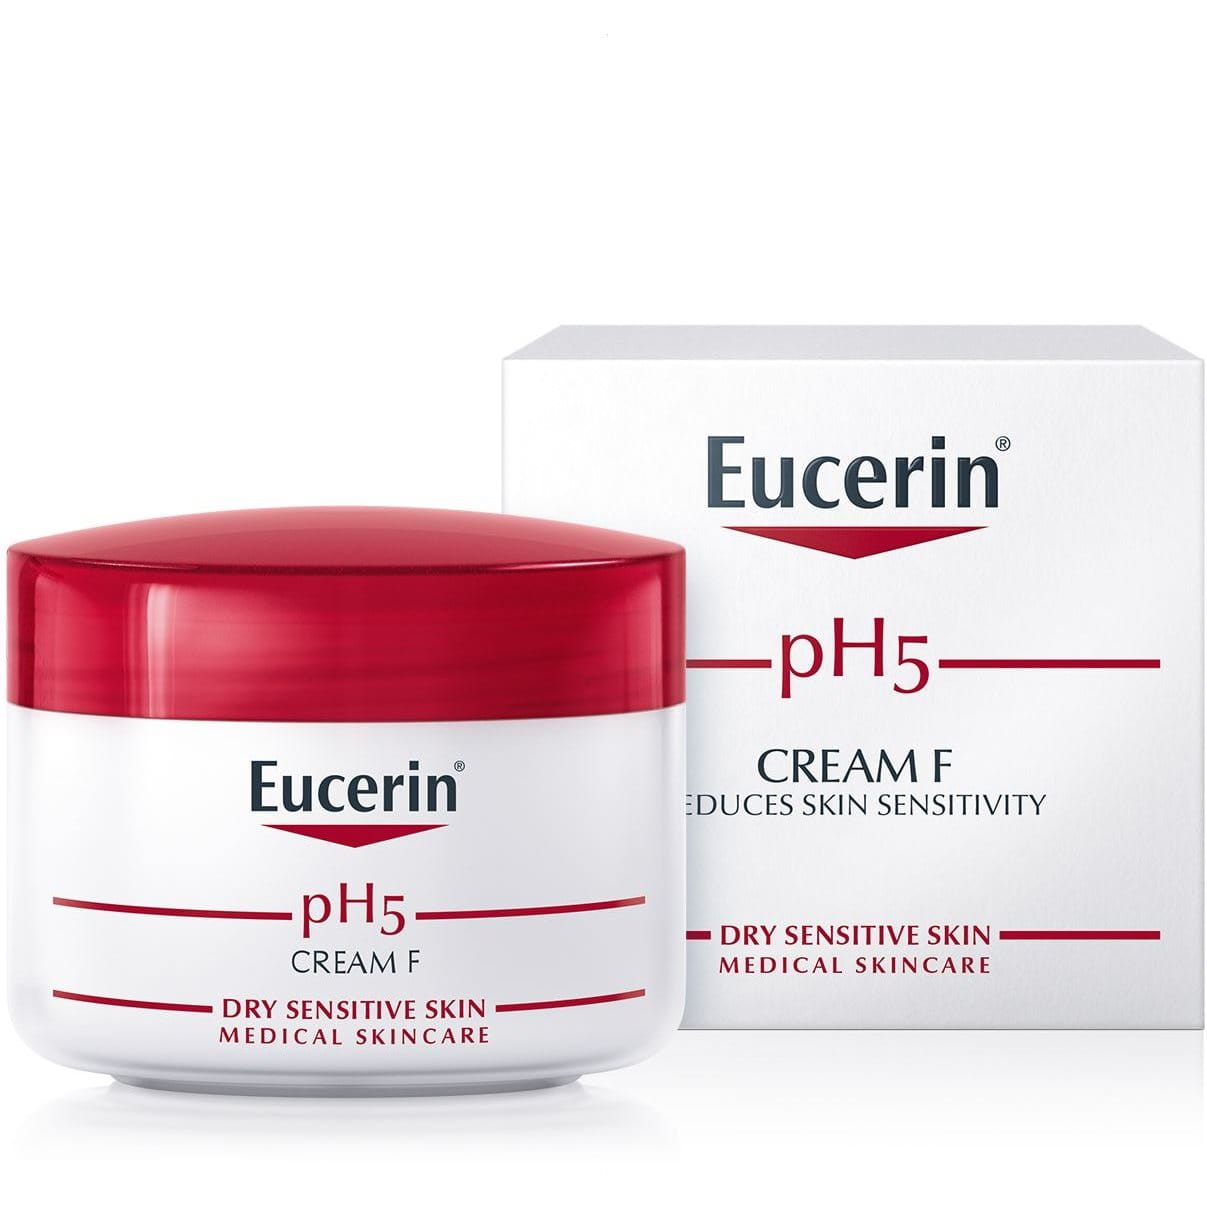 Eucerin pH5 Cream F